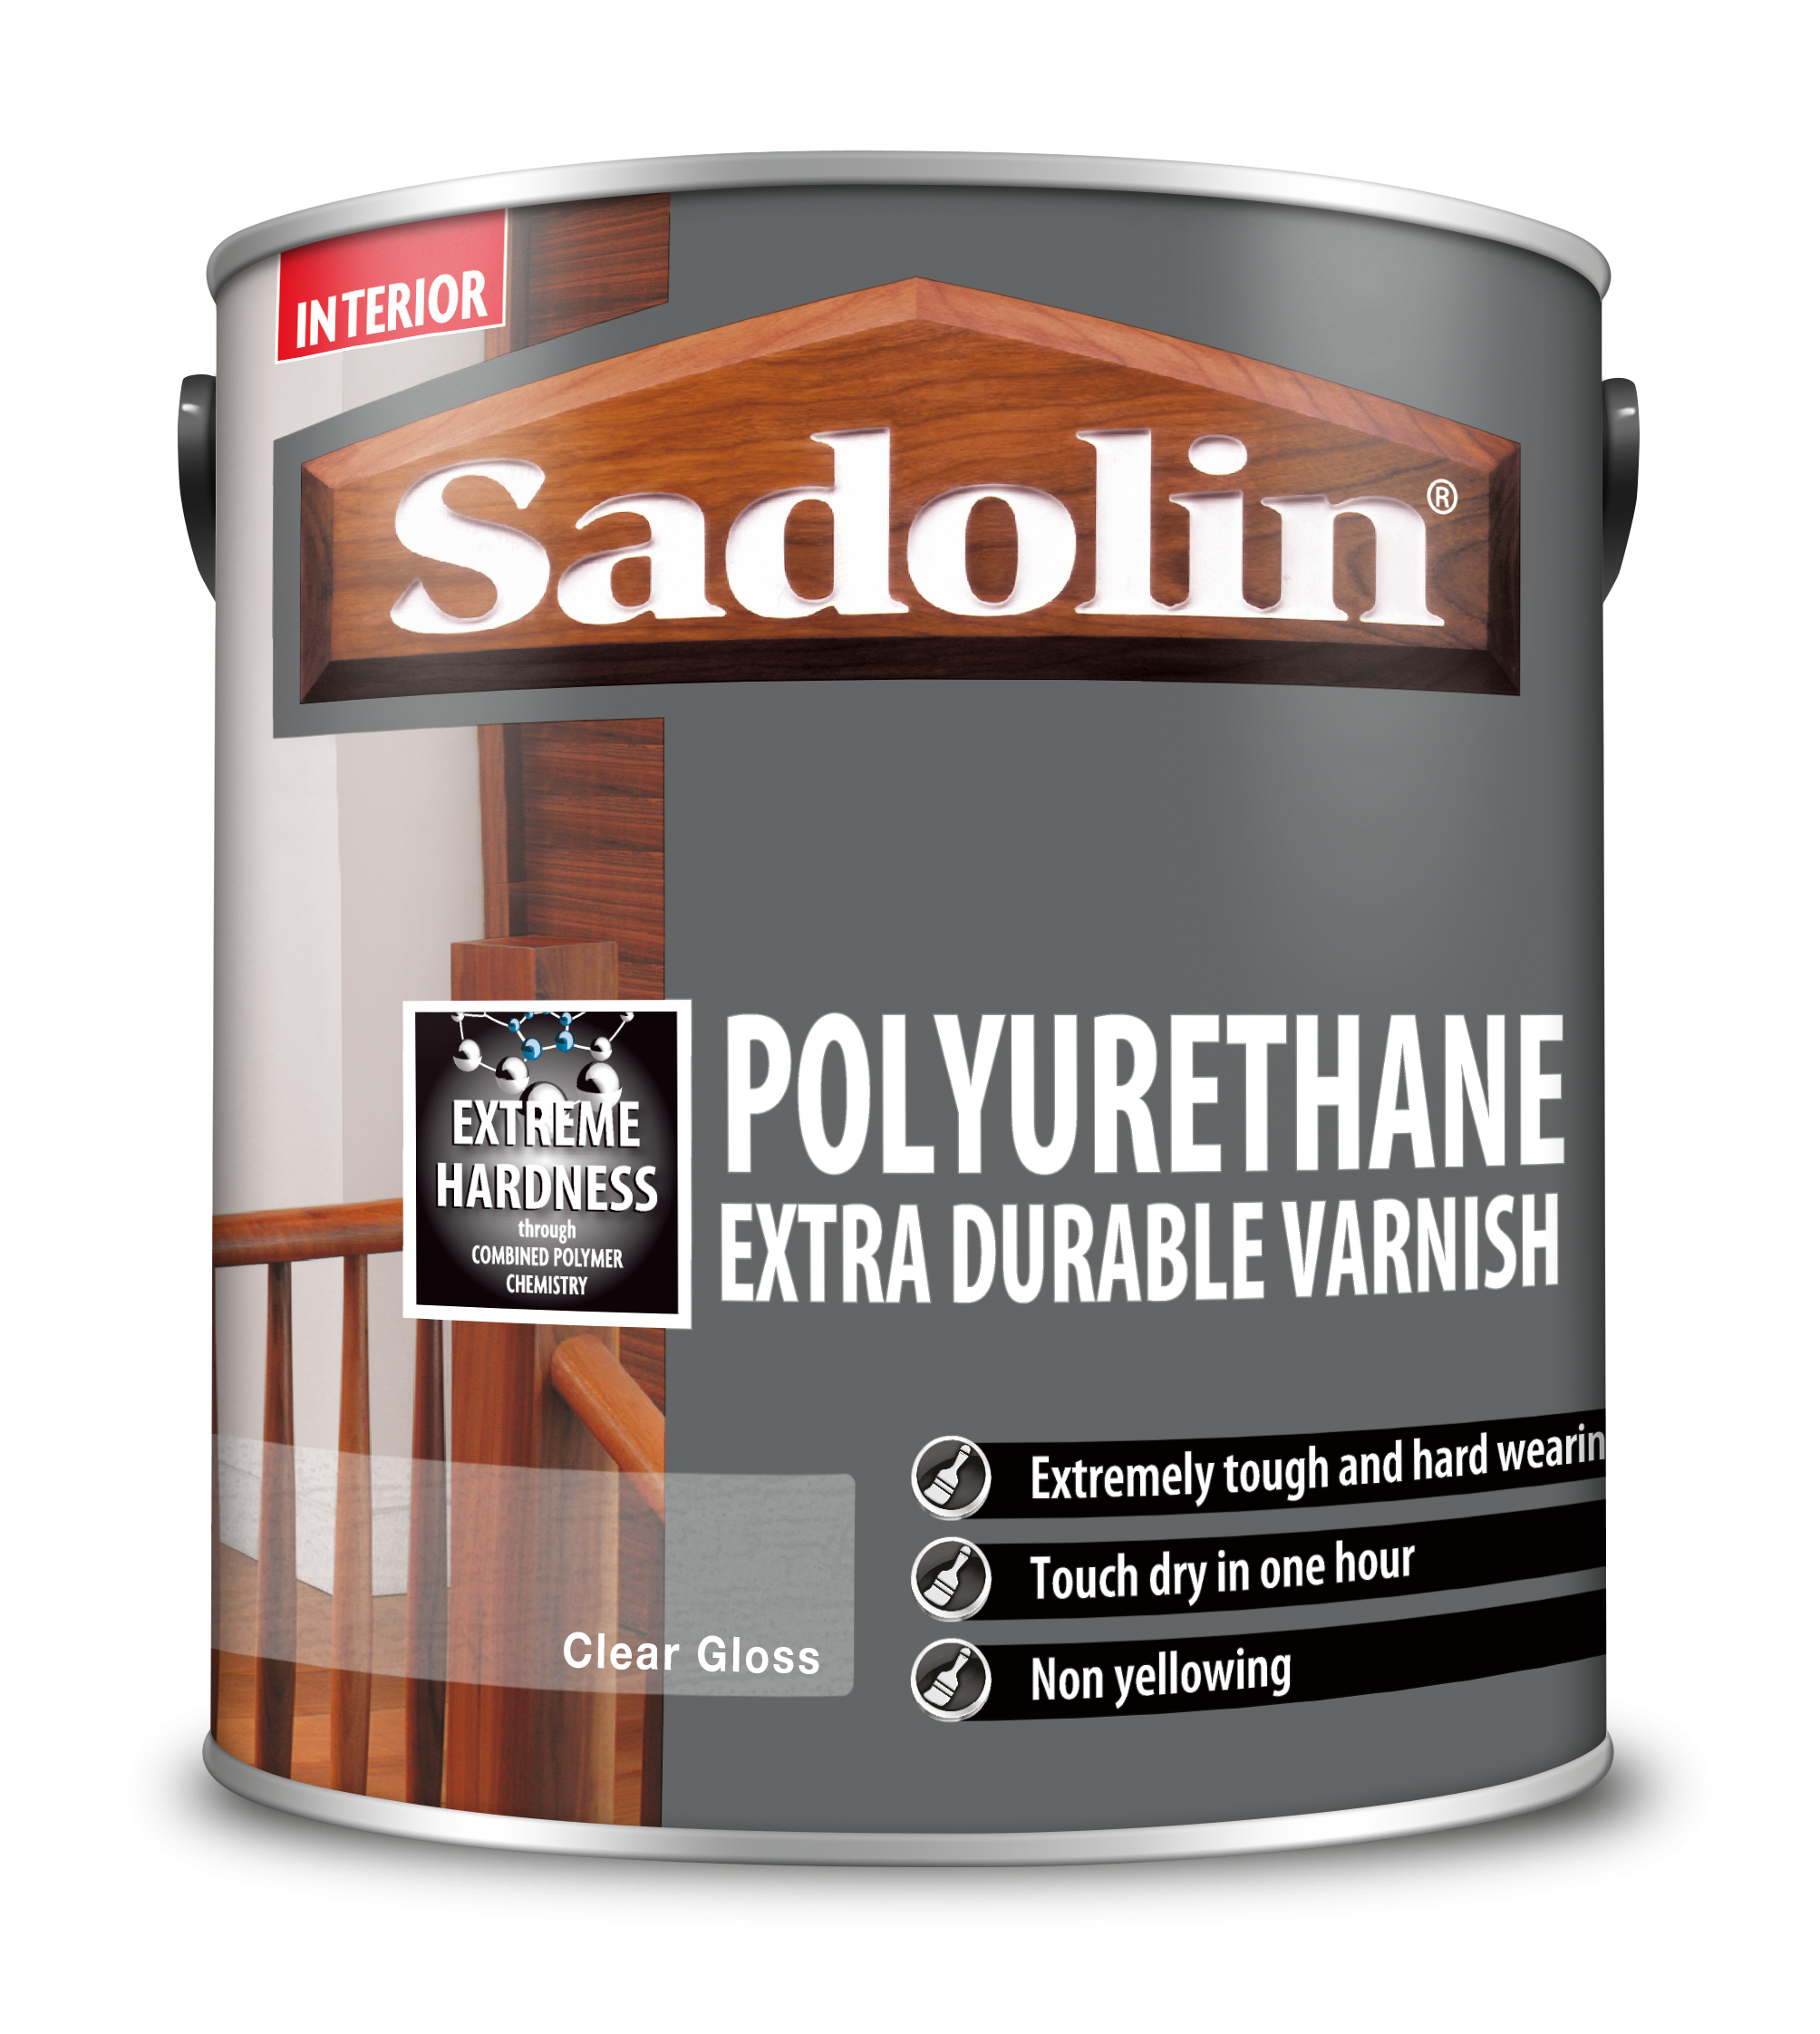 Sadolin Polyurethane Extra Durable Varnish Clear Gloss 2.5L [MPPSSUQ]  5038010